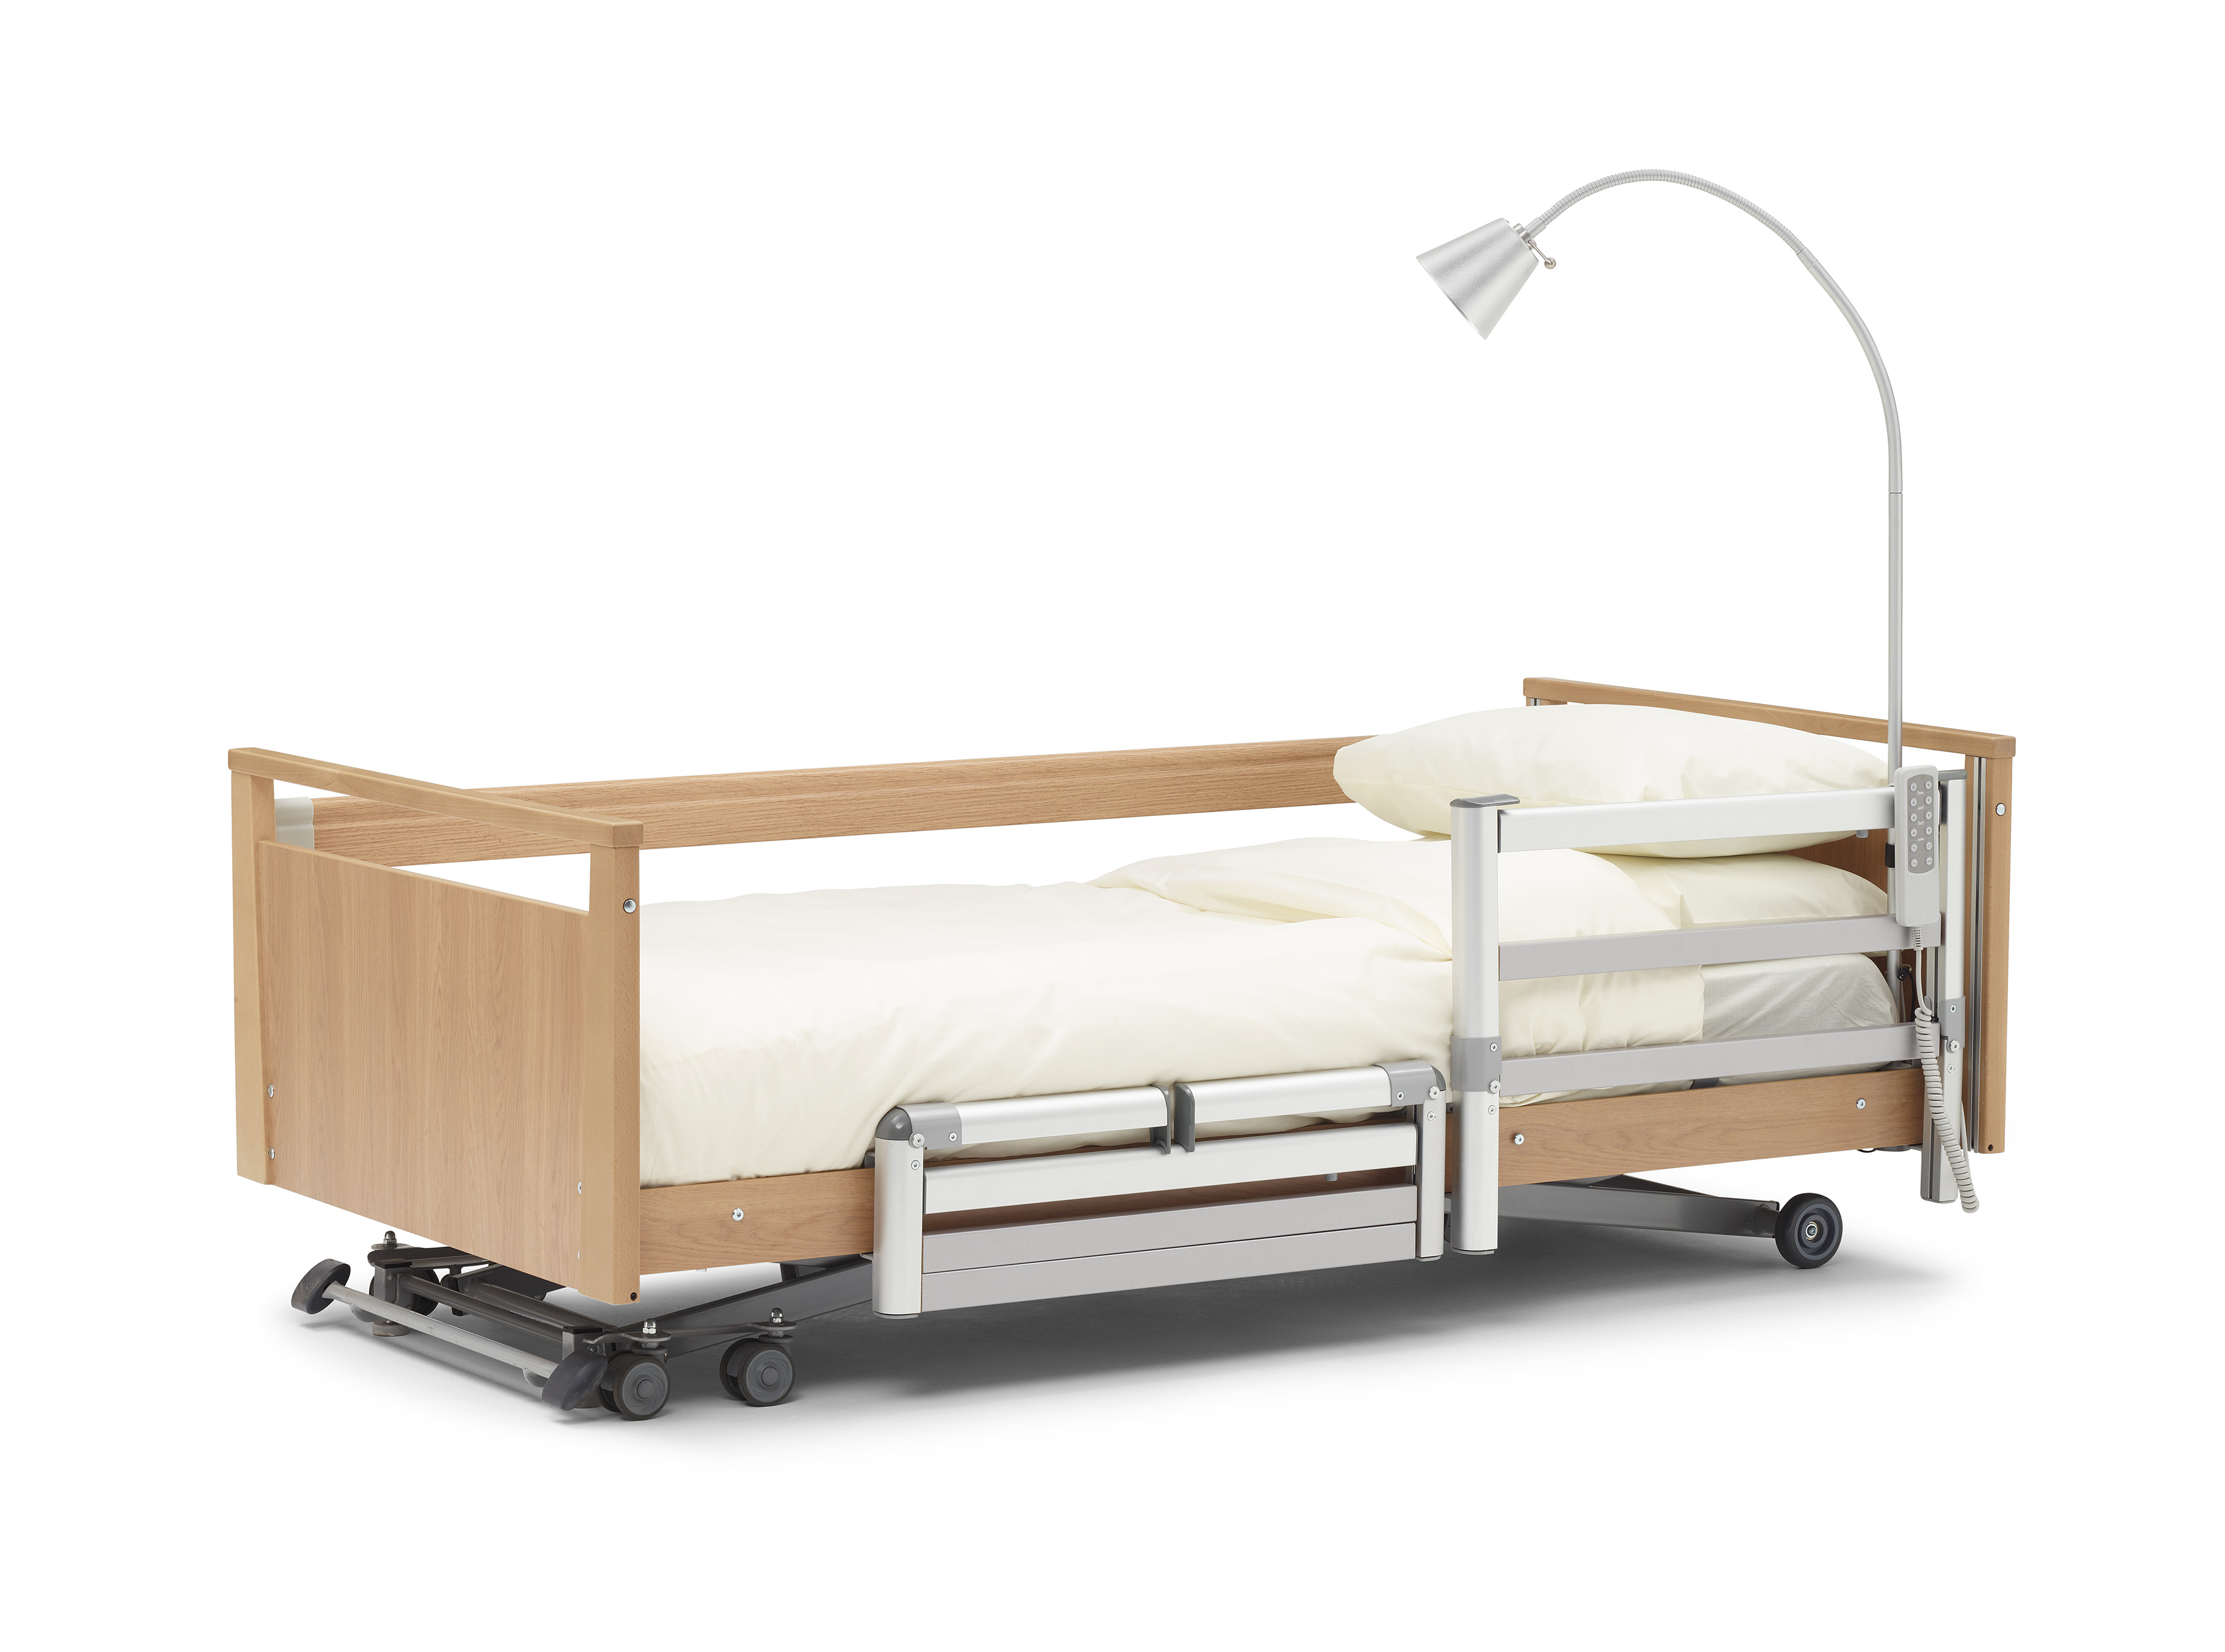 Impress 3 bed c/w Classic head/foot boards, side skirts, 2 x aluminium split side rails and 2 x side rails
Finish: Light Sorano Oak